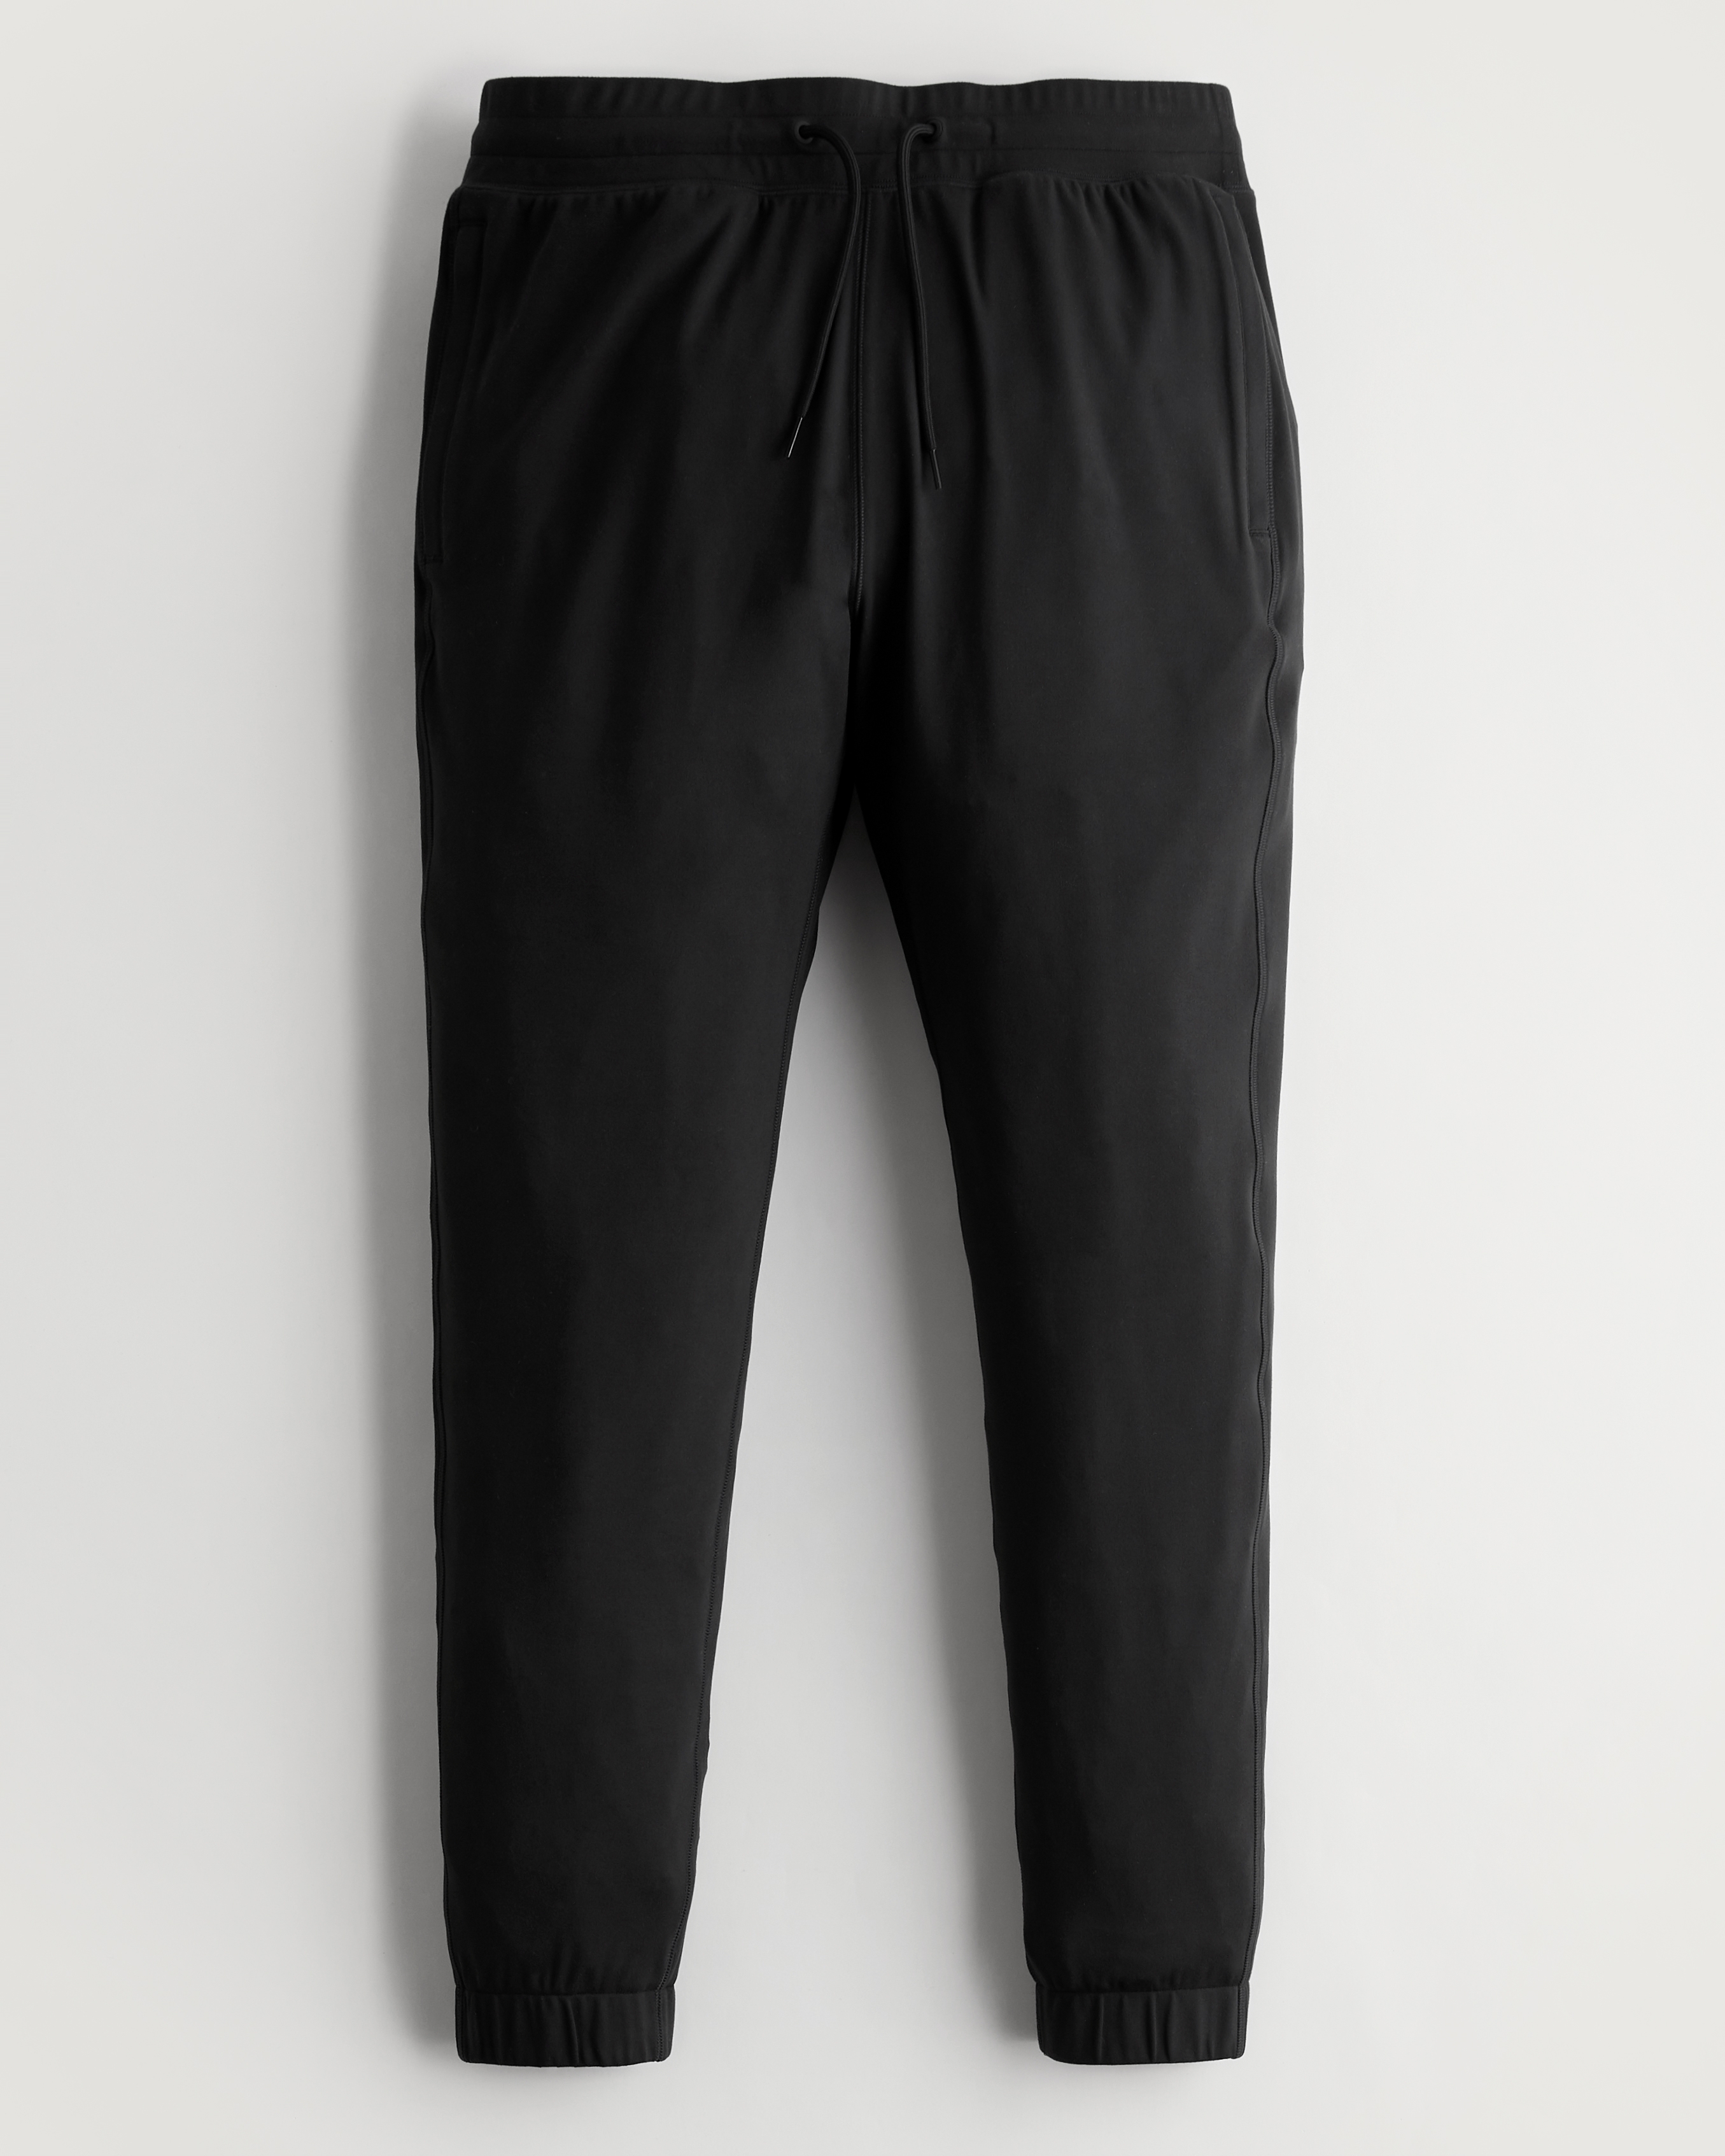 Buy Hollister Gilly Hicks Mesh Shorts in Black 2024 Online